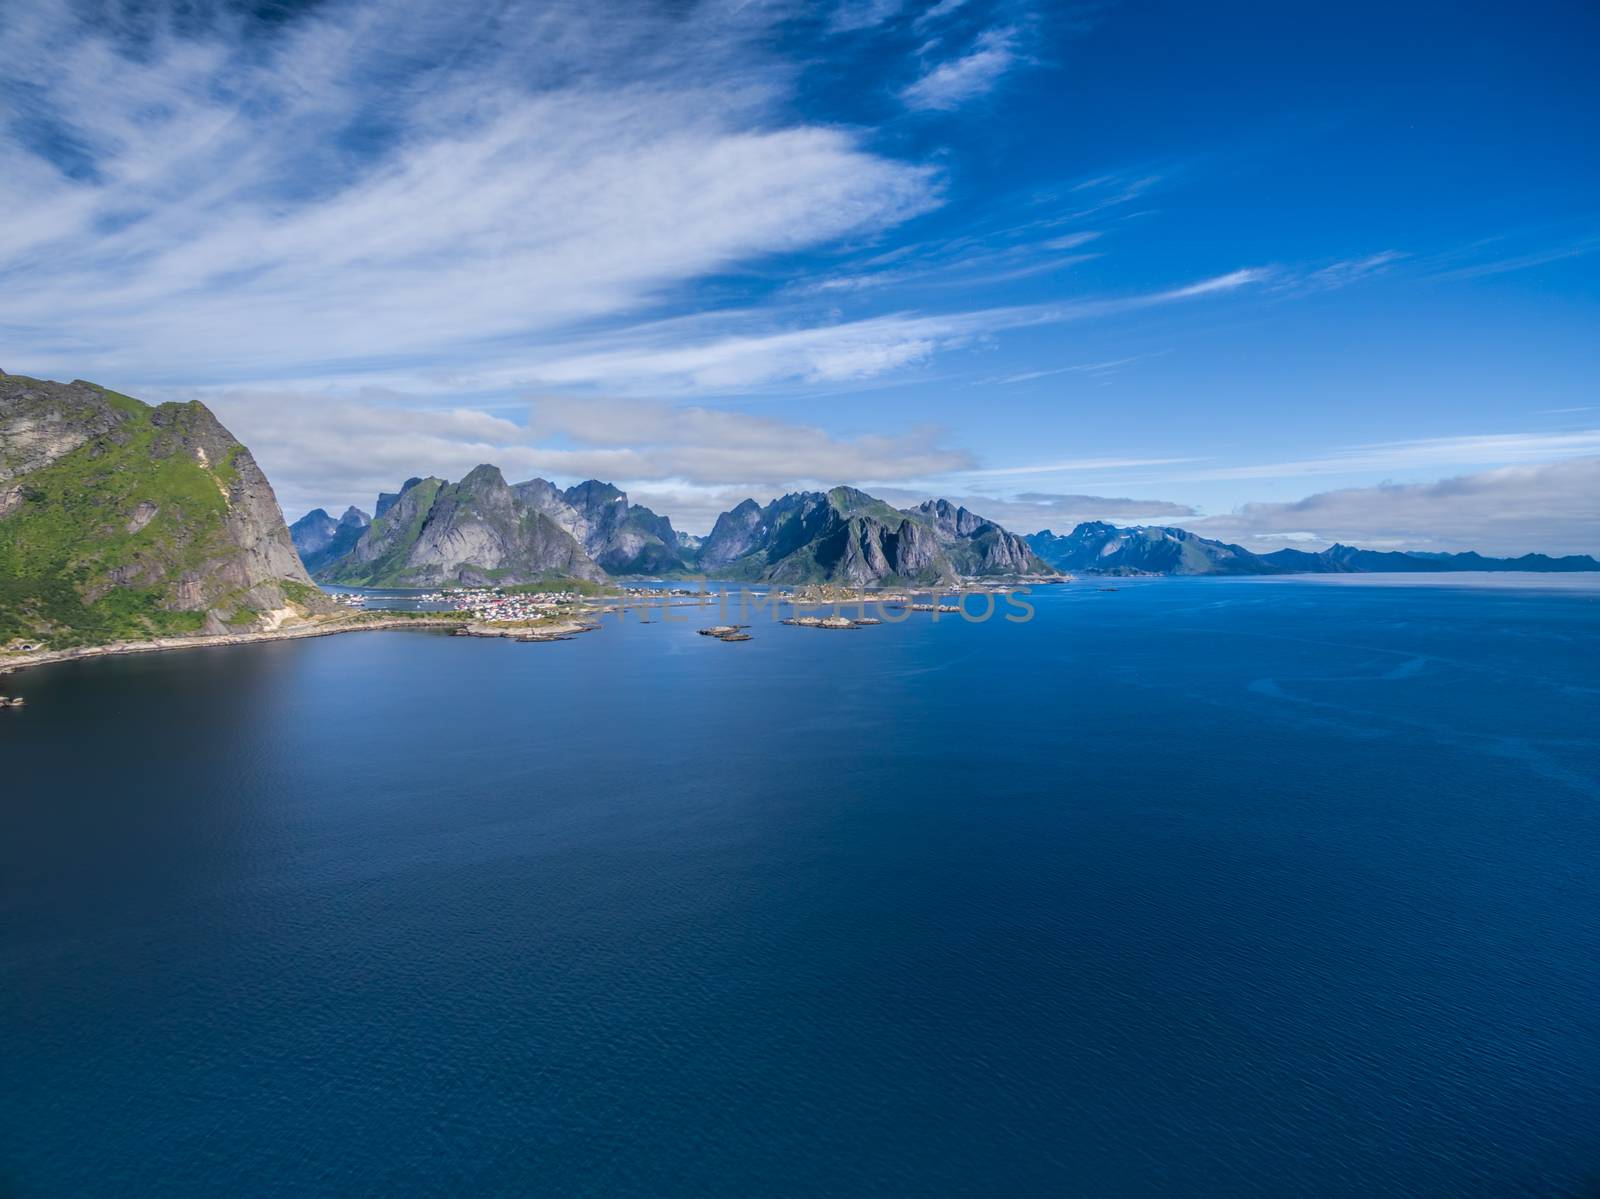 Scenic aerial panorama of Lofoten islands in Norway